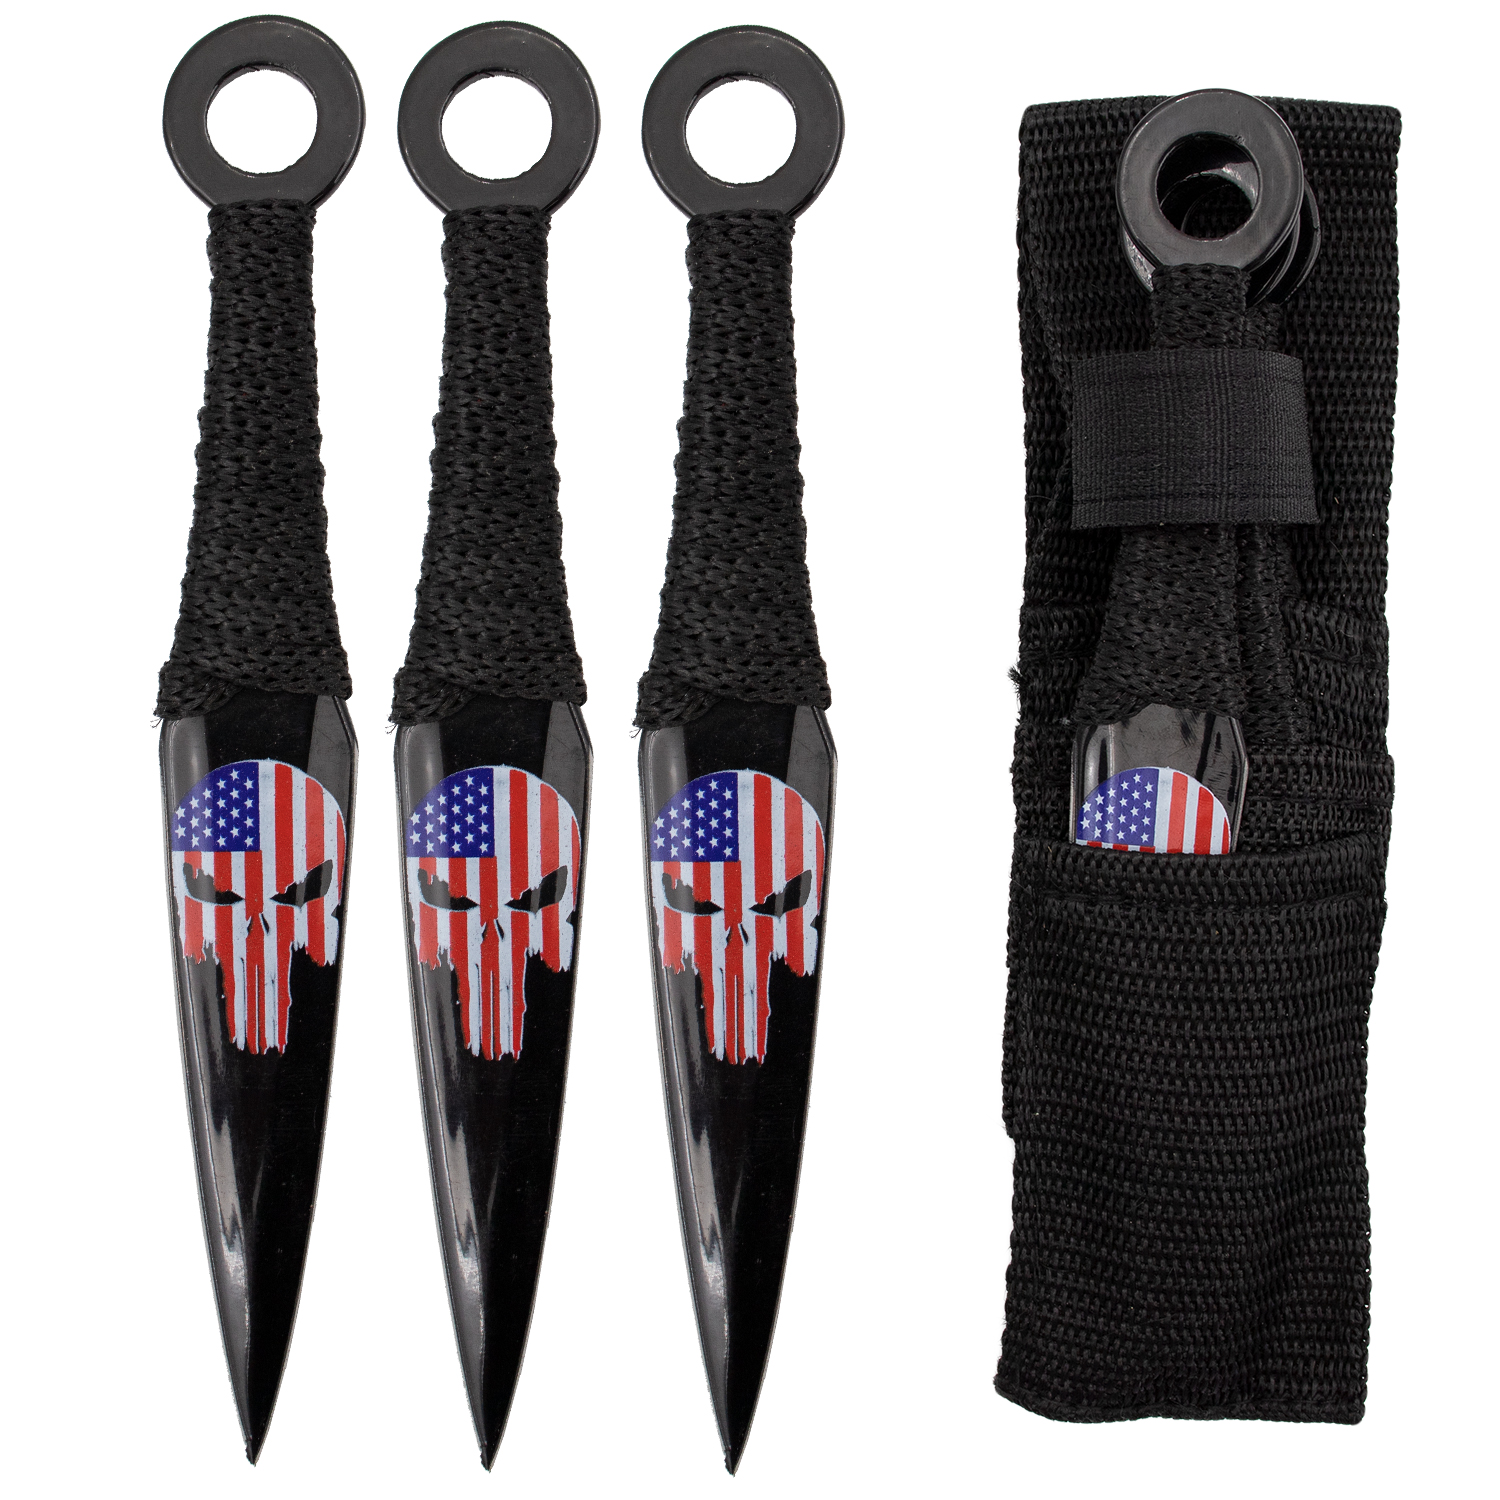 6.5 Inch Throwing Knife Set (Set of 3) USA Punisher